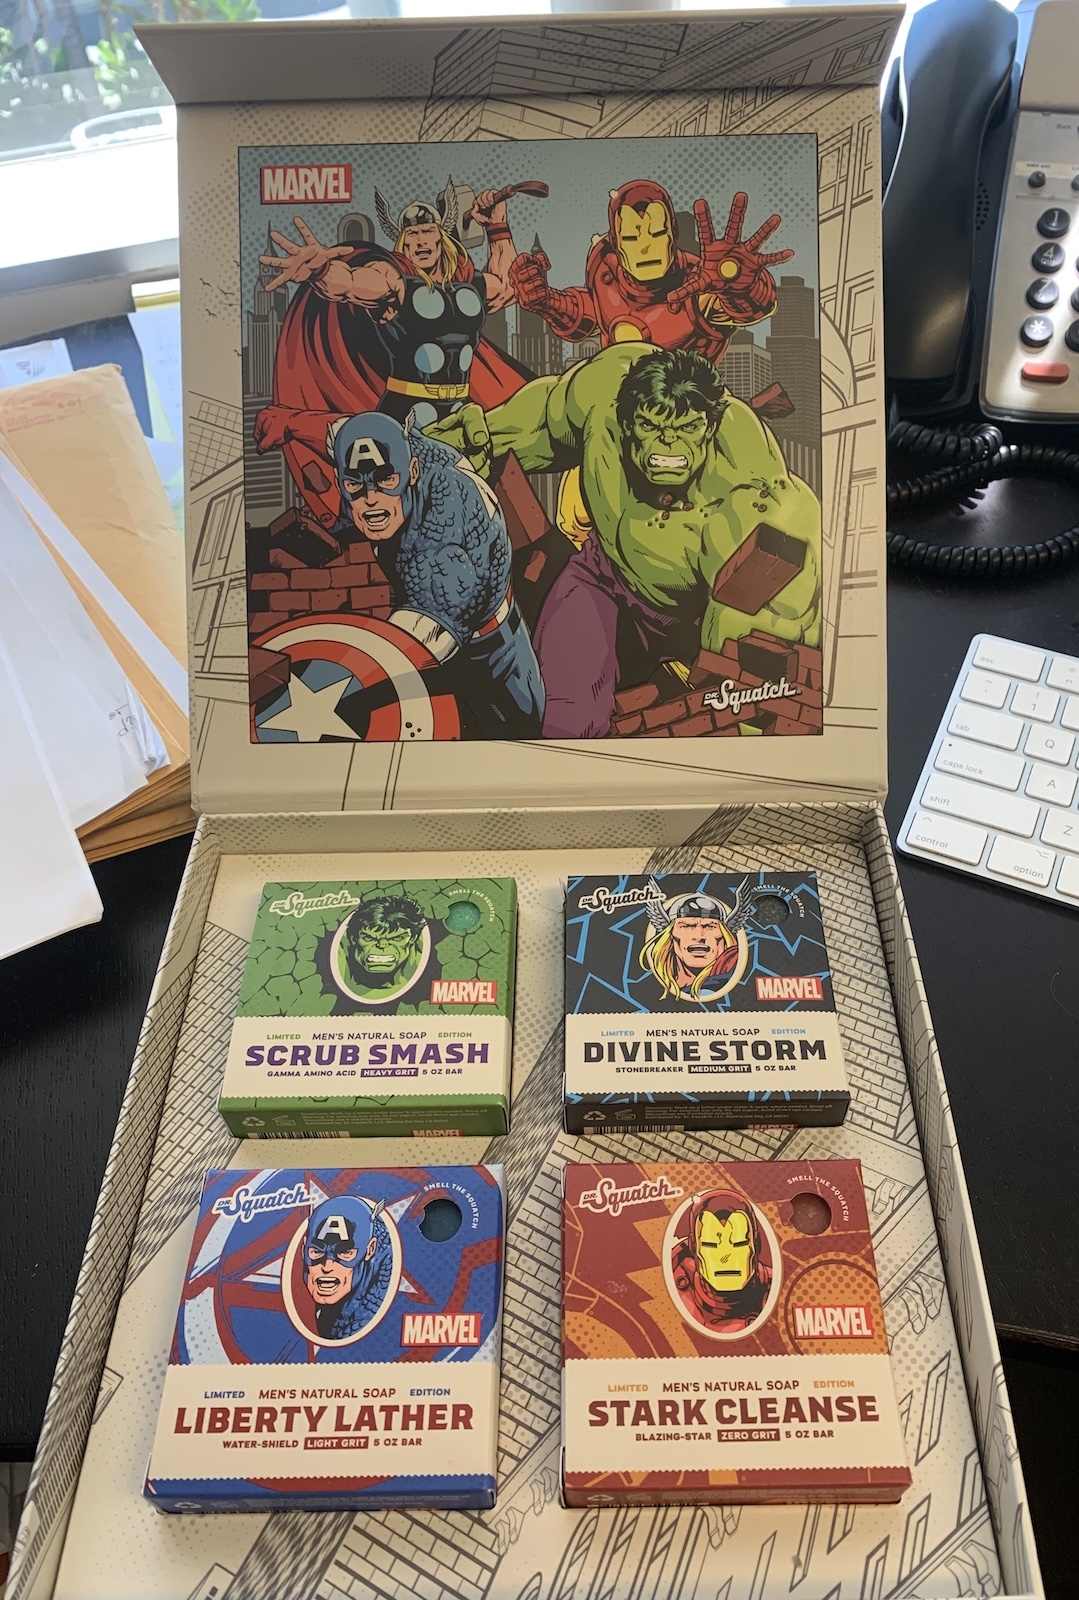 Dr. Squatch Avengers Collection Box